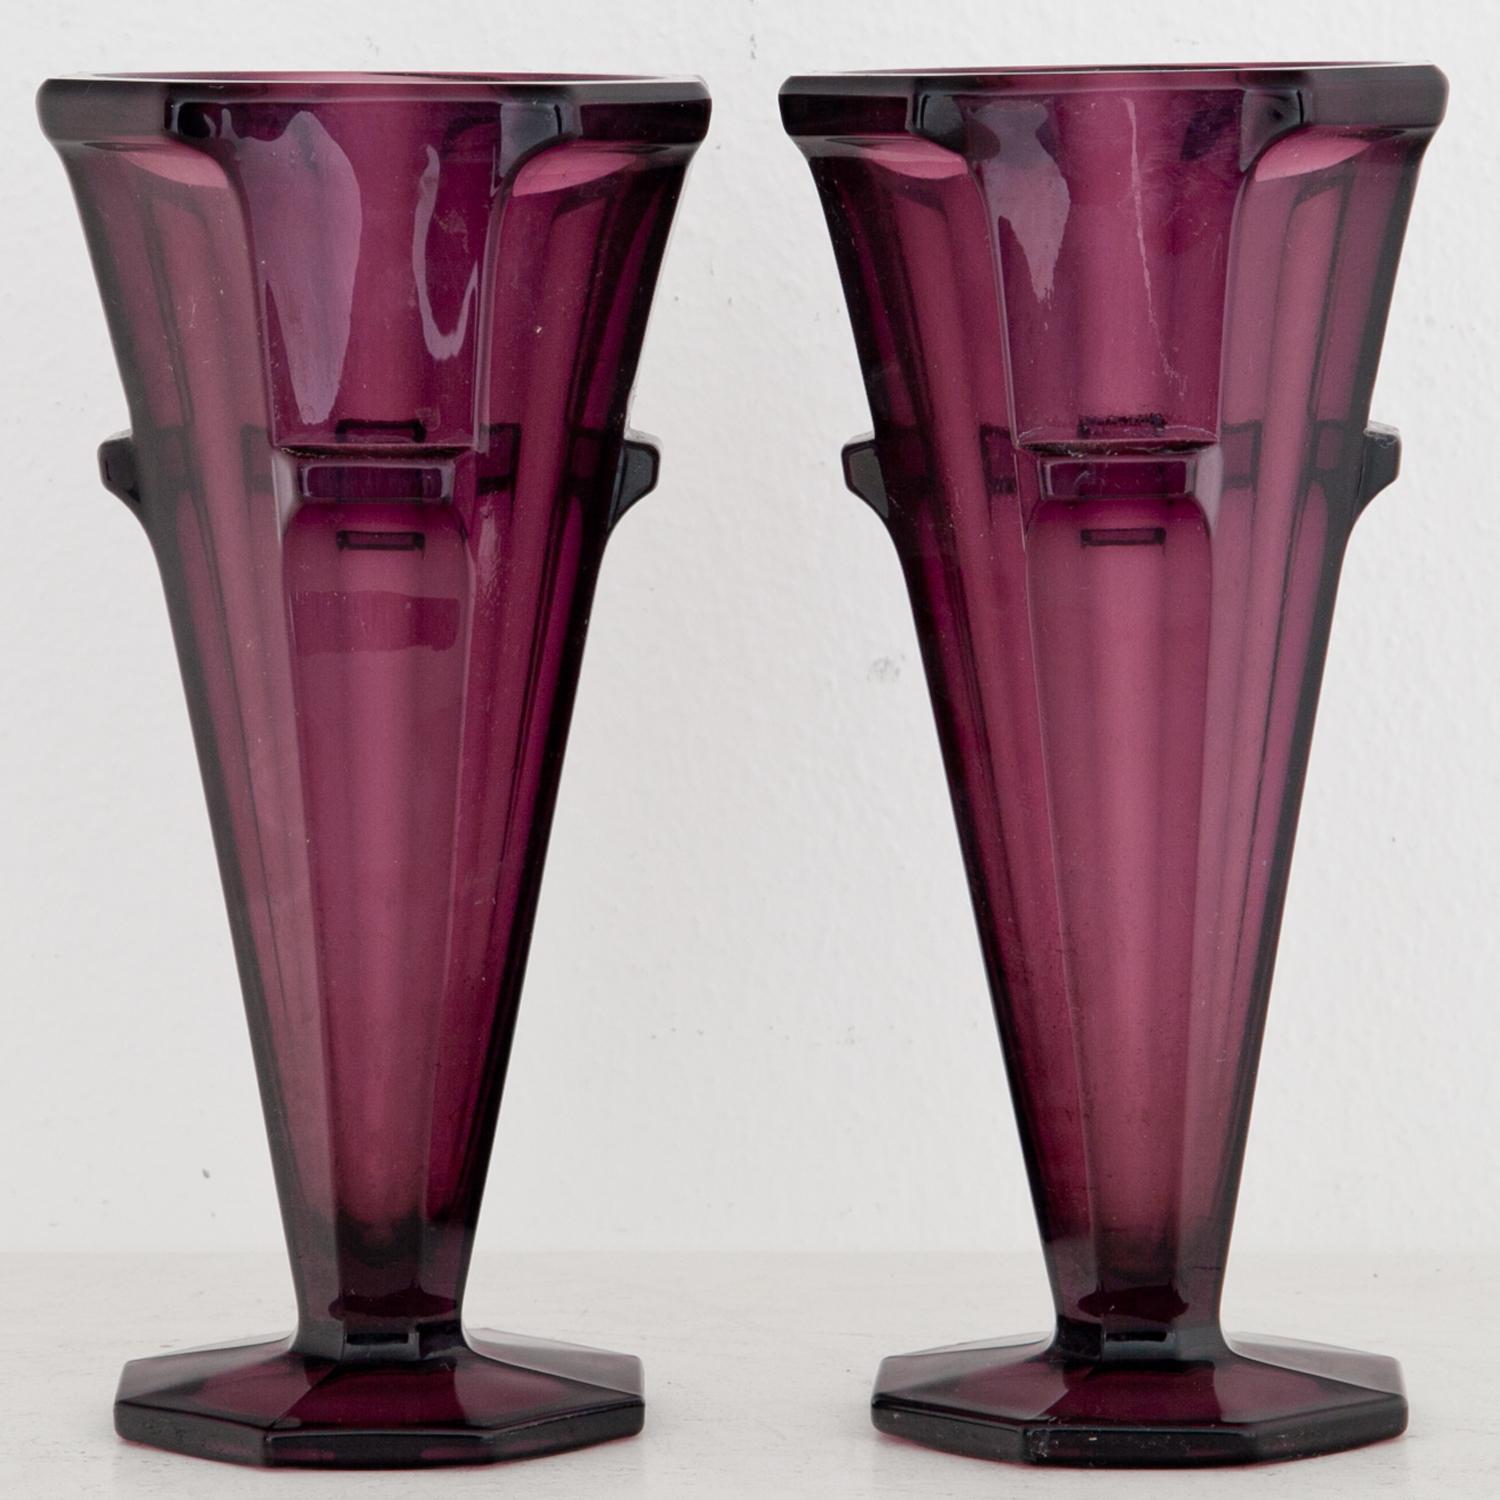 Pair of Vases, Mid-20th Century (20. Jahrhundert)